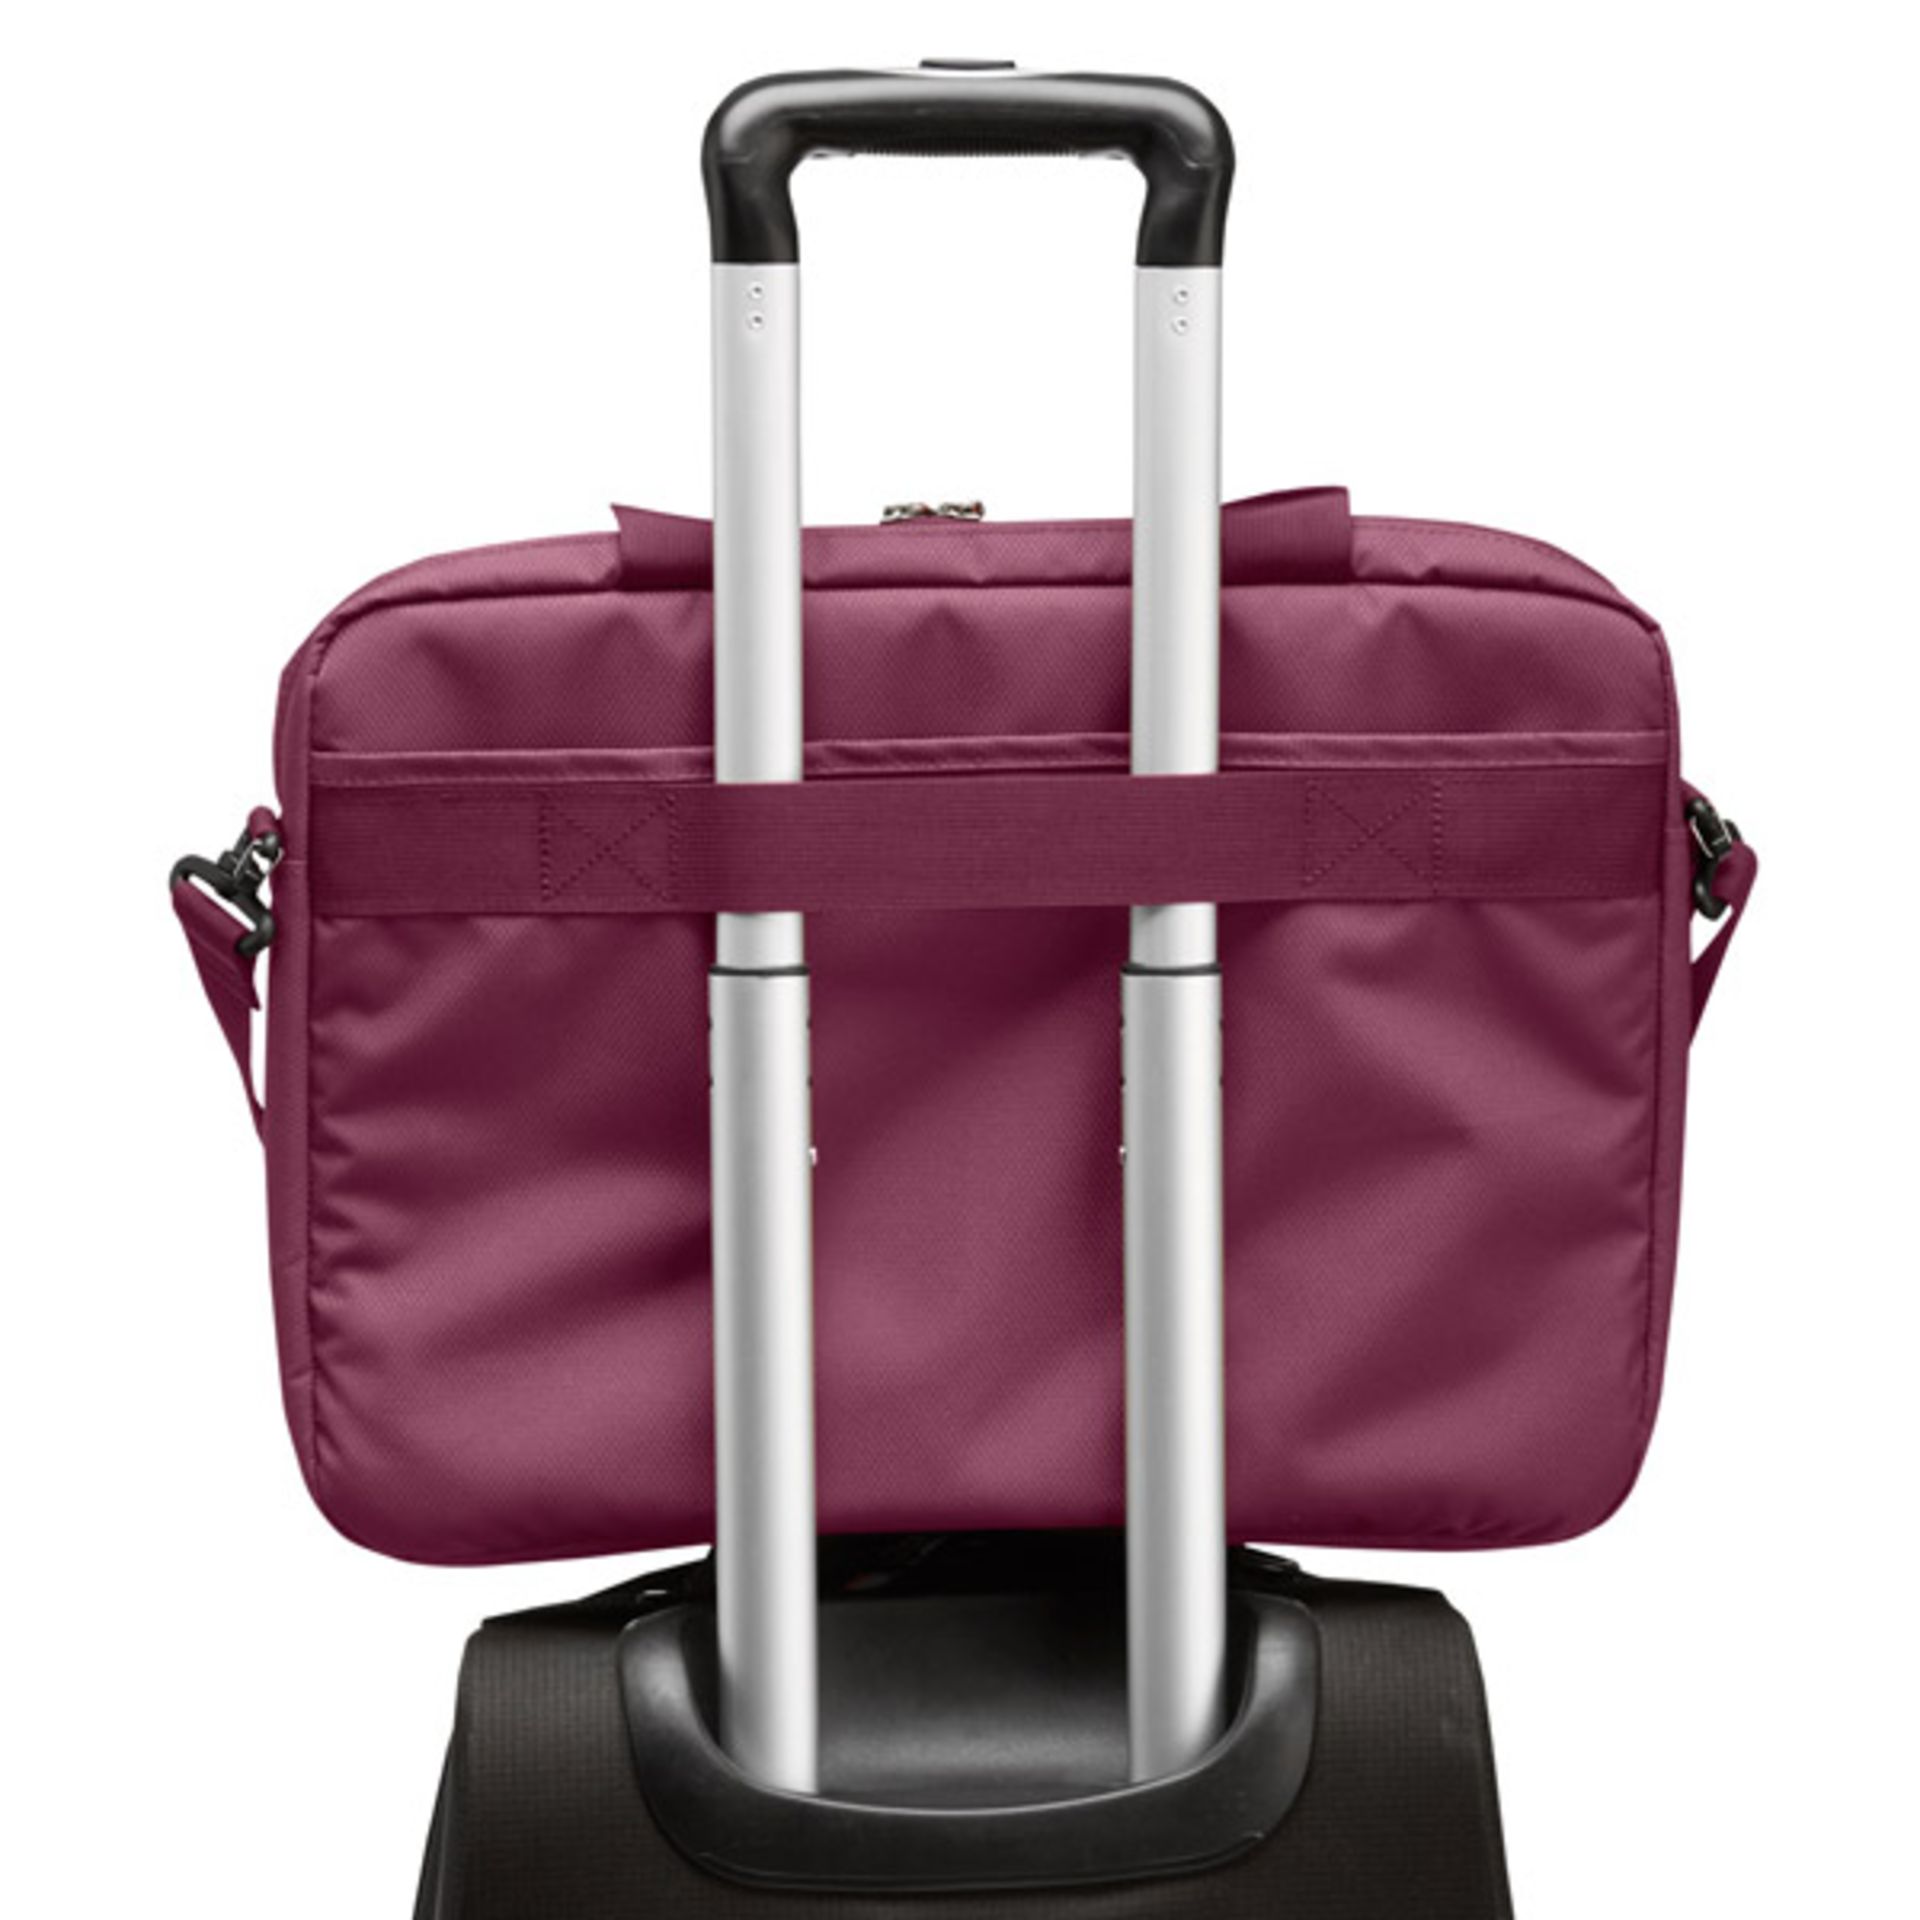 V Brand New STM Swift Medium Shoulder Bag - RRP £42.99 Amazon Price £33.57 - For Laptop/Tablet Up To - Image 2 of 3